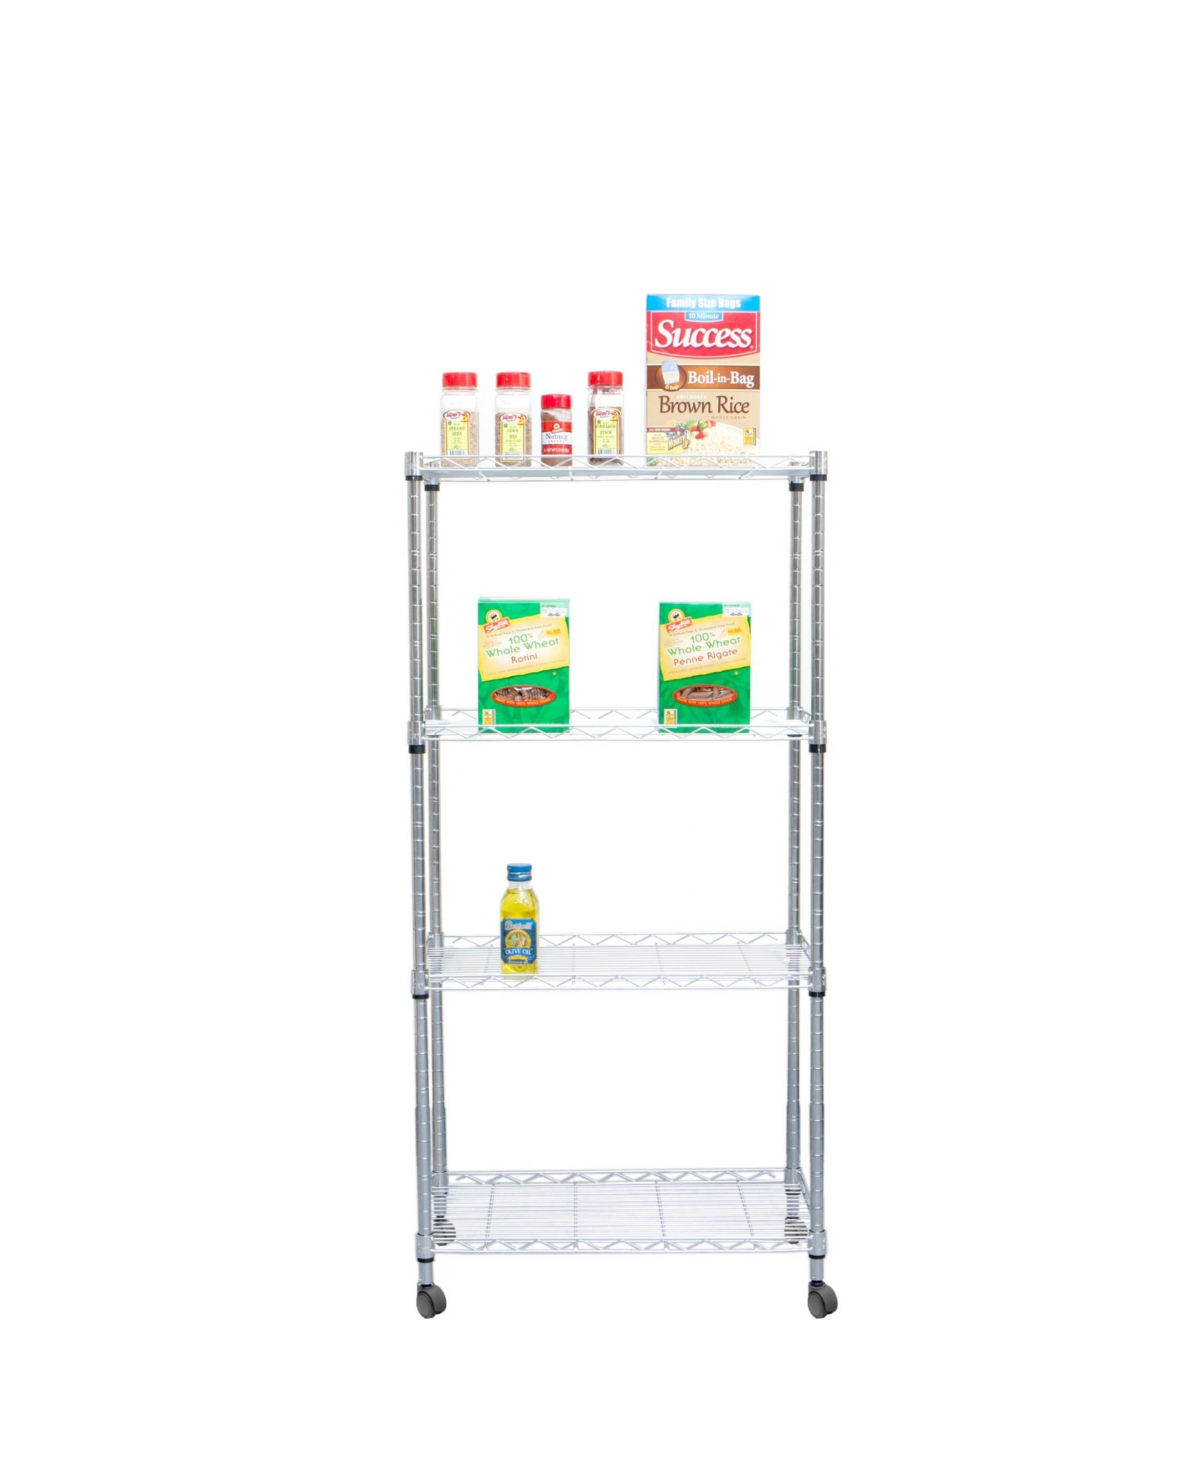 4 Tier Adjustable Heavy Duty Metal Storage Rack Shelving Unit with Wheels - Silver